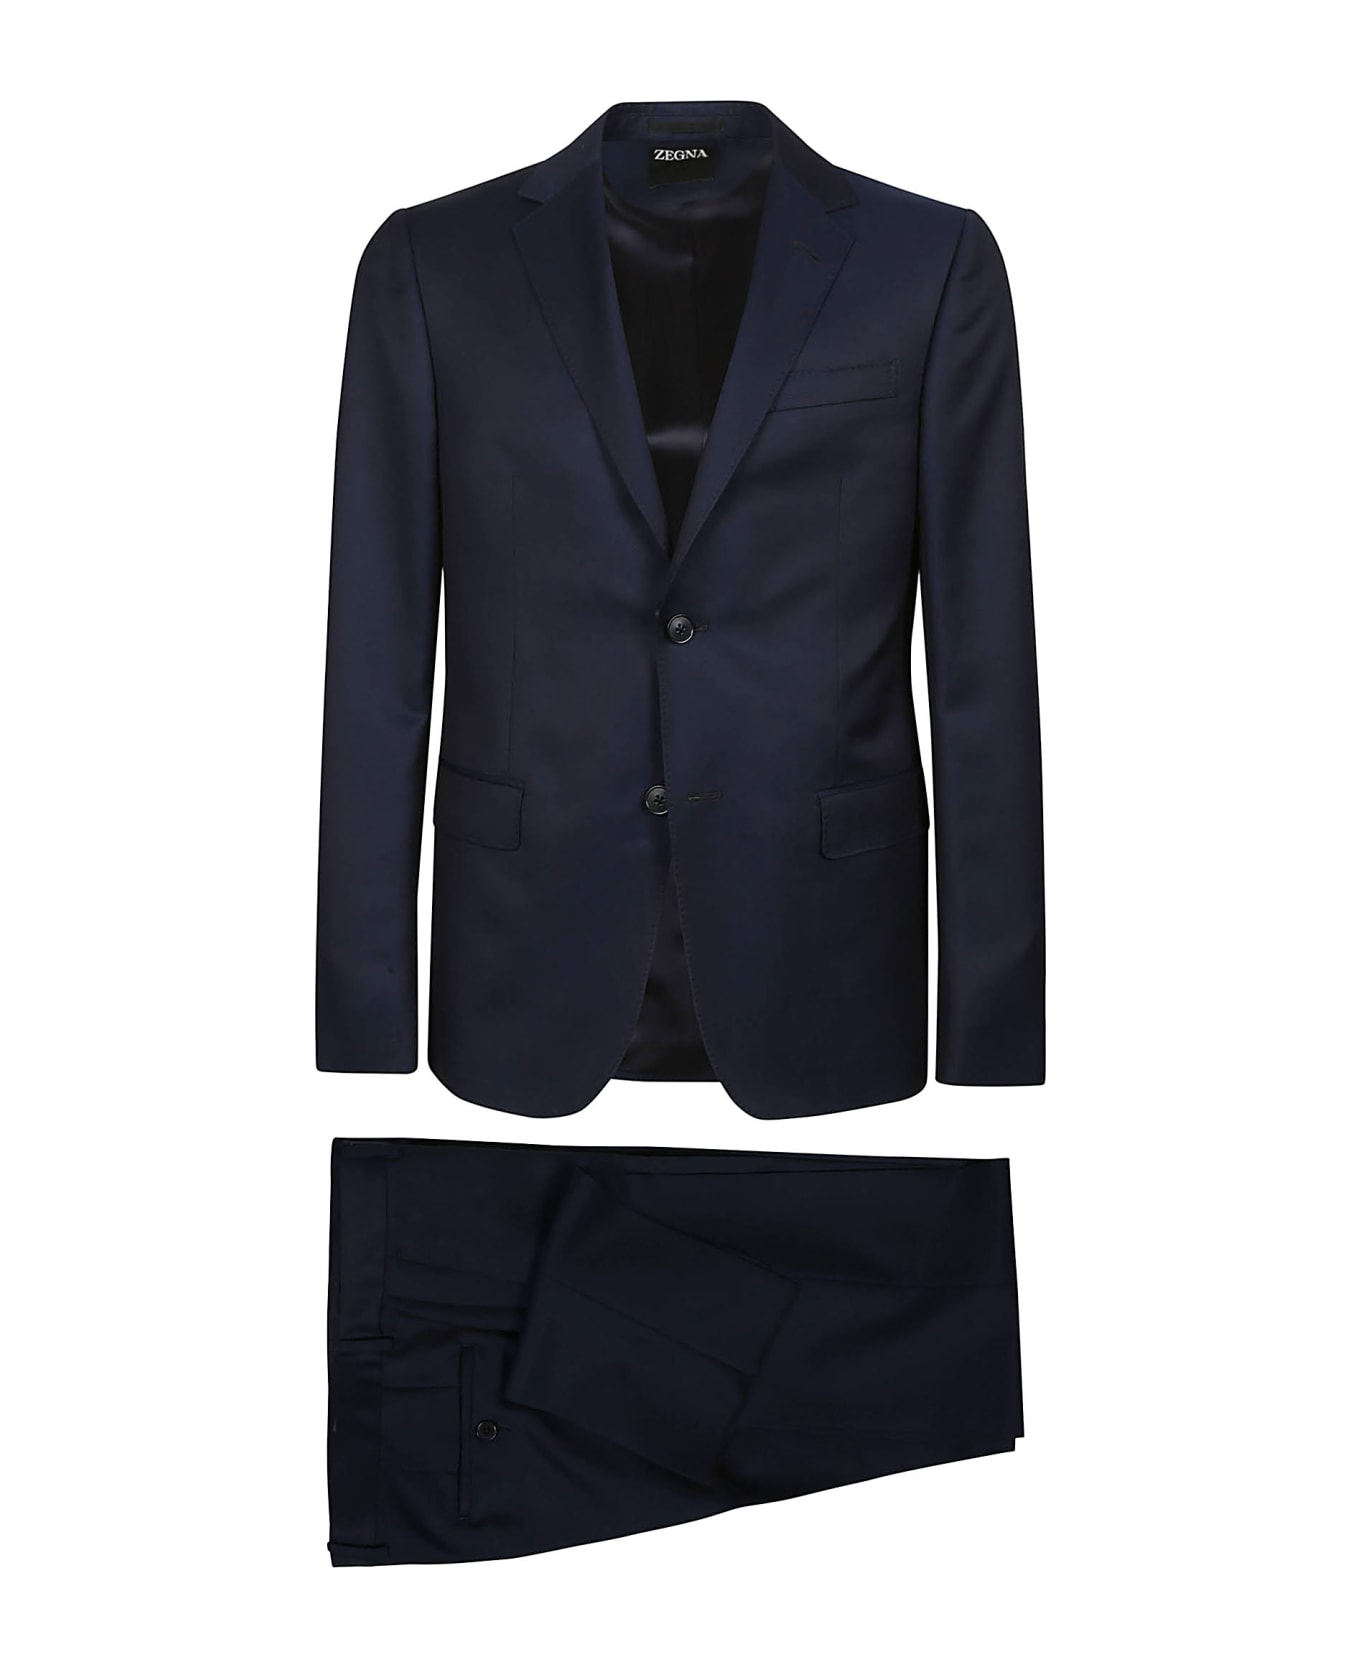 Zegna Lux Tailoring Suit - Blu スーツ